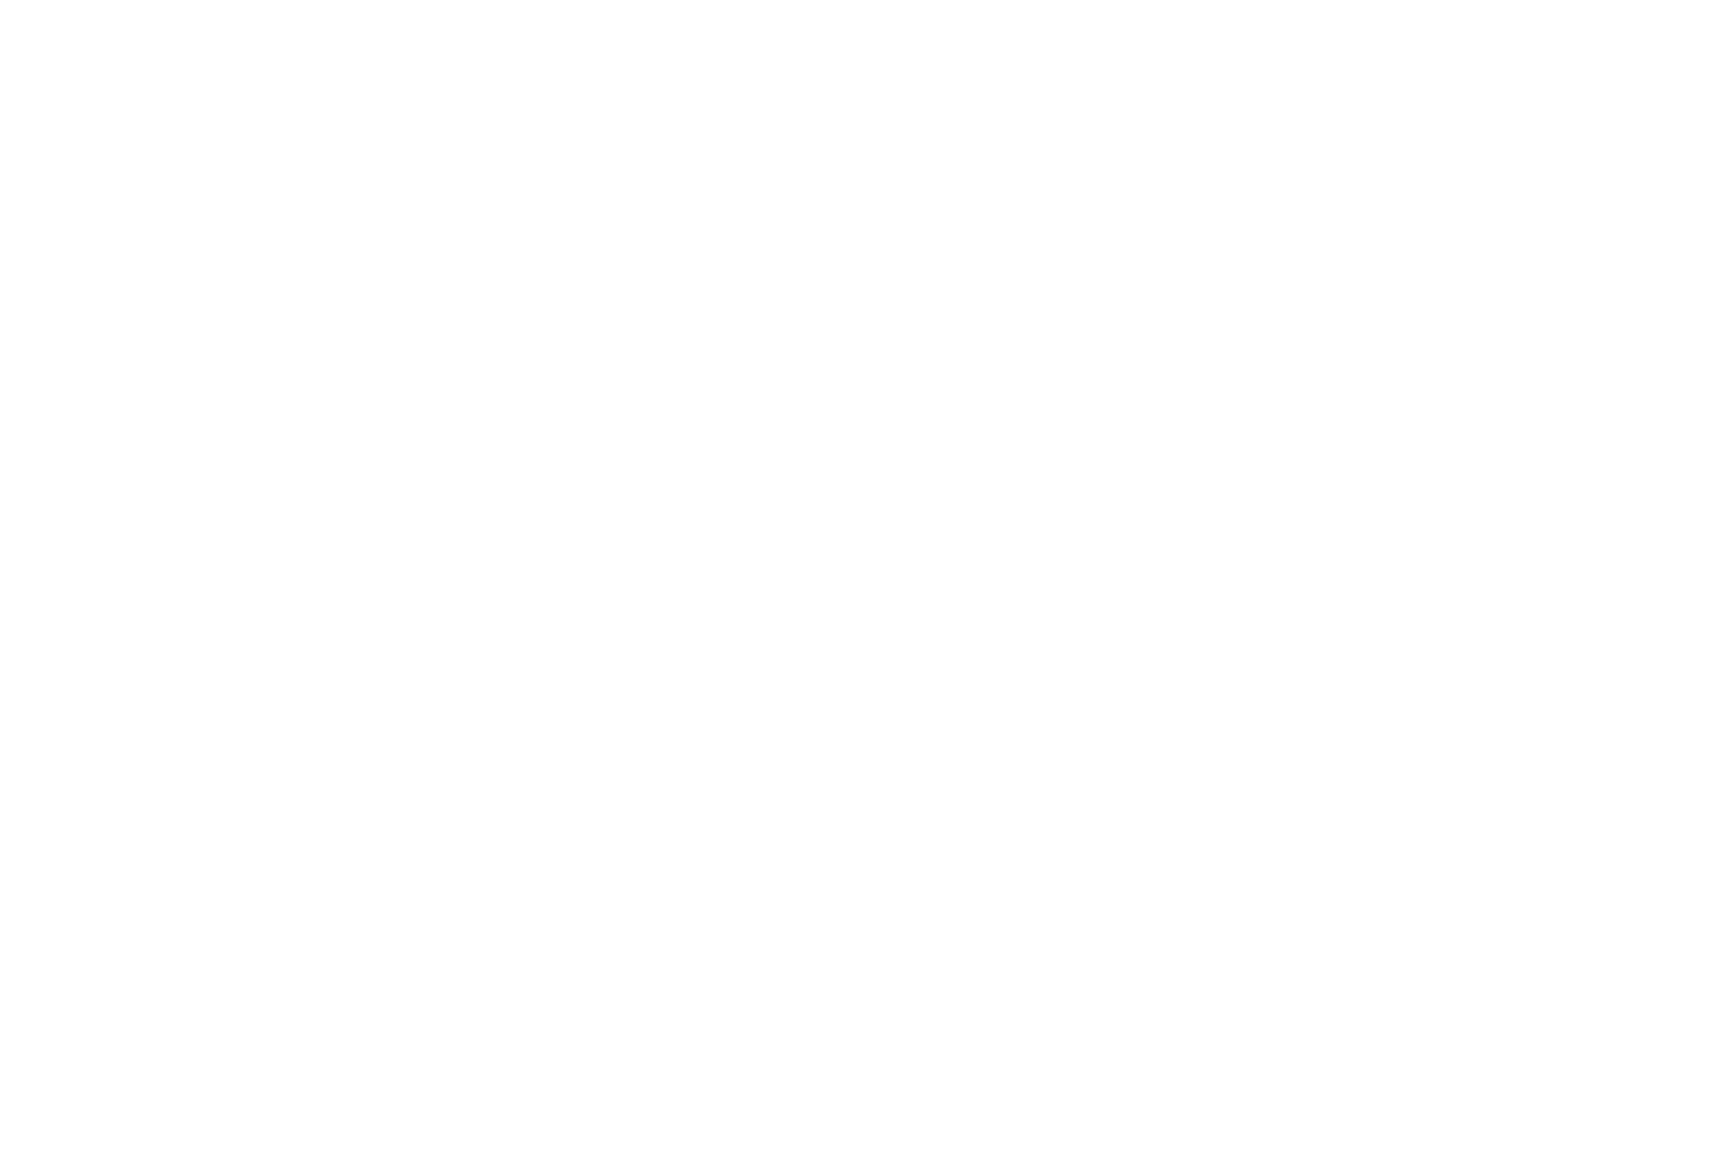 Riverwood Corporate Center